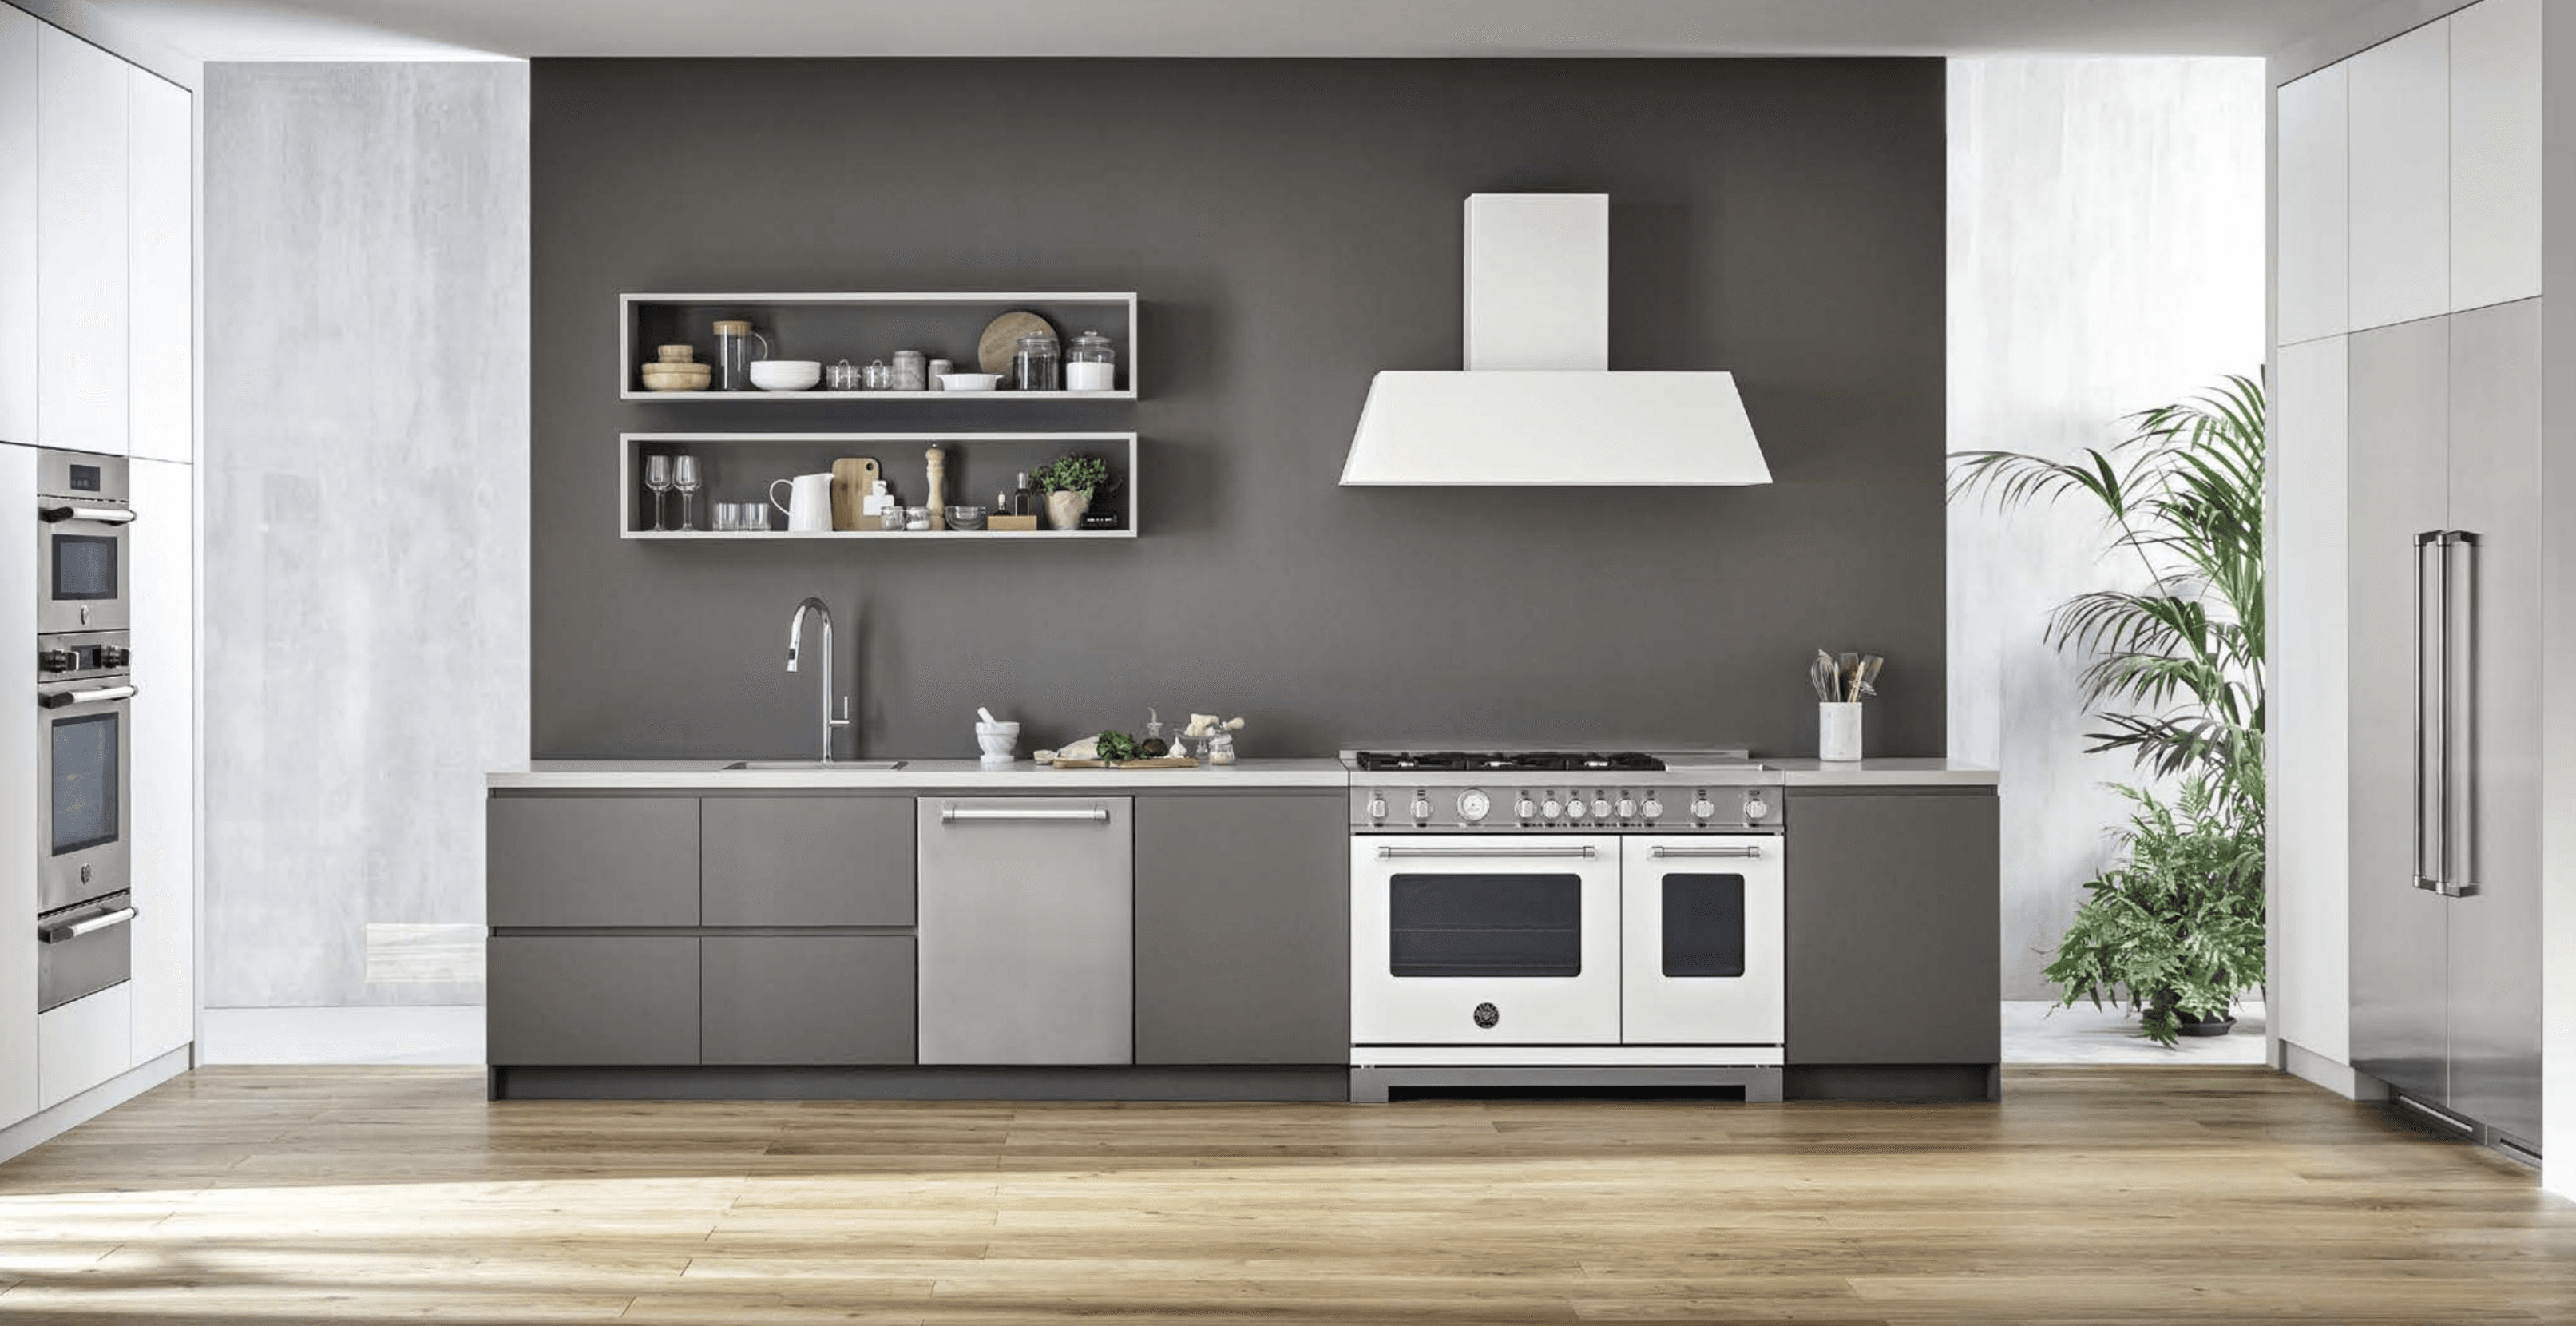 kitchen appliances inside a home